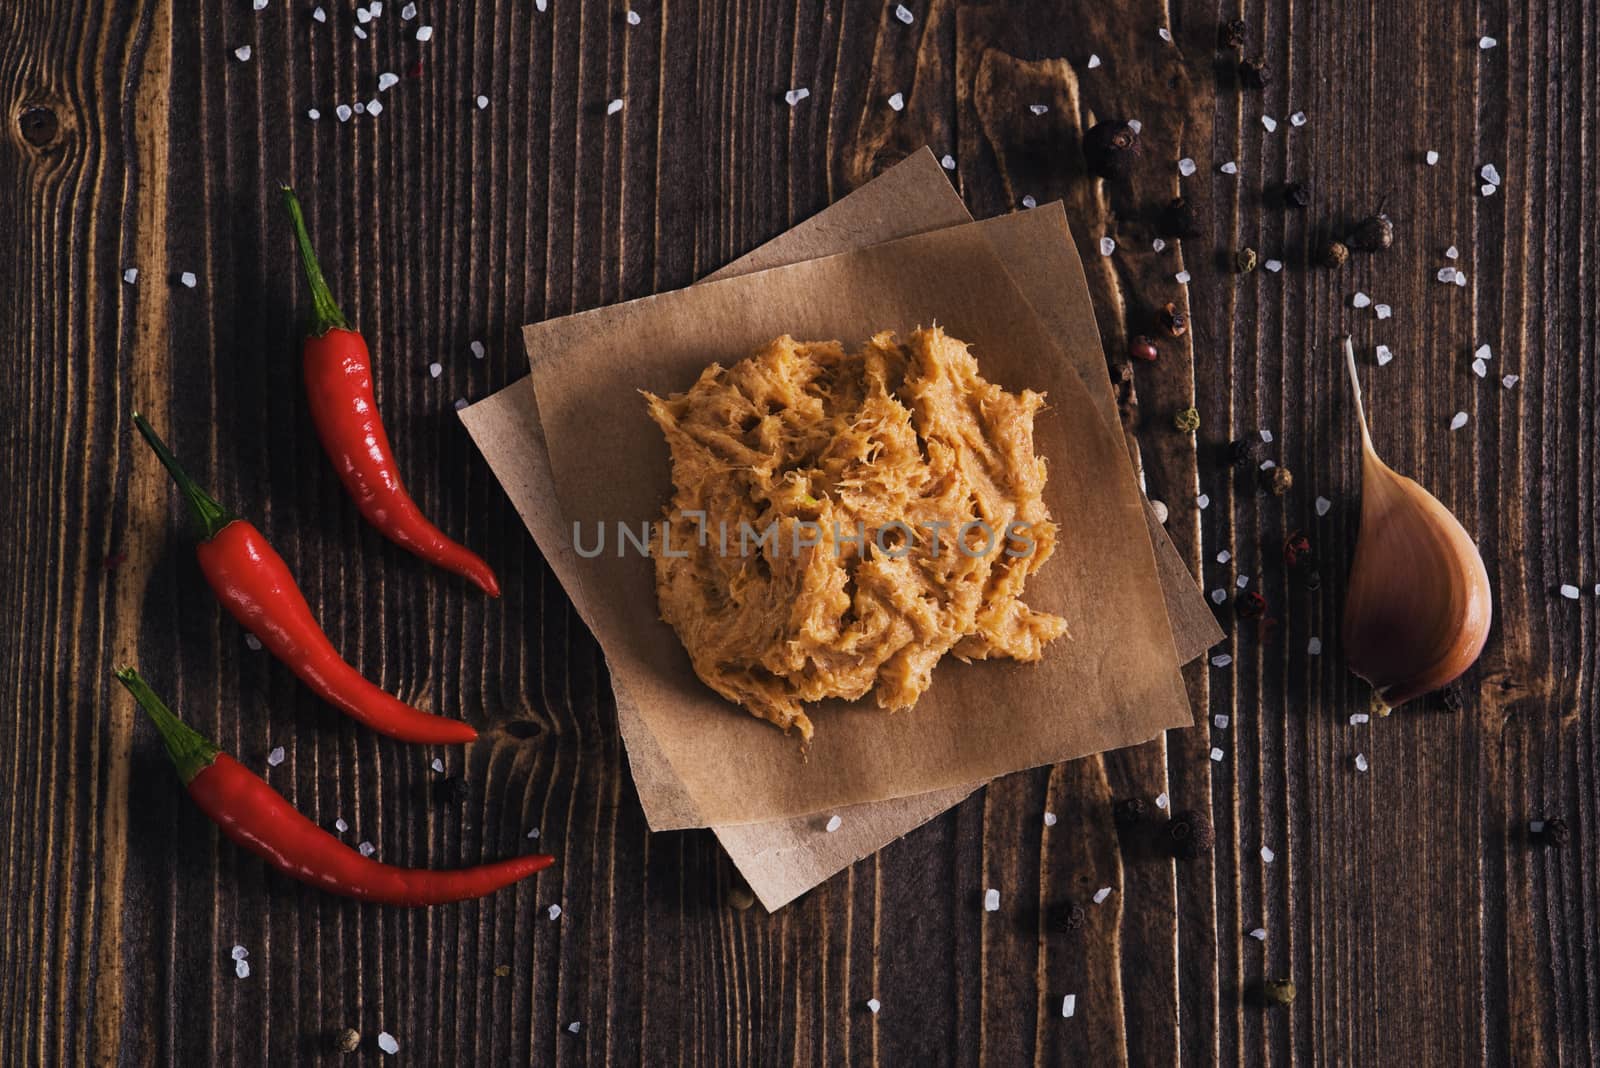 Lard with salt, chili pepper and garlic by kzen